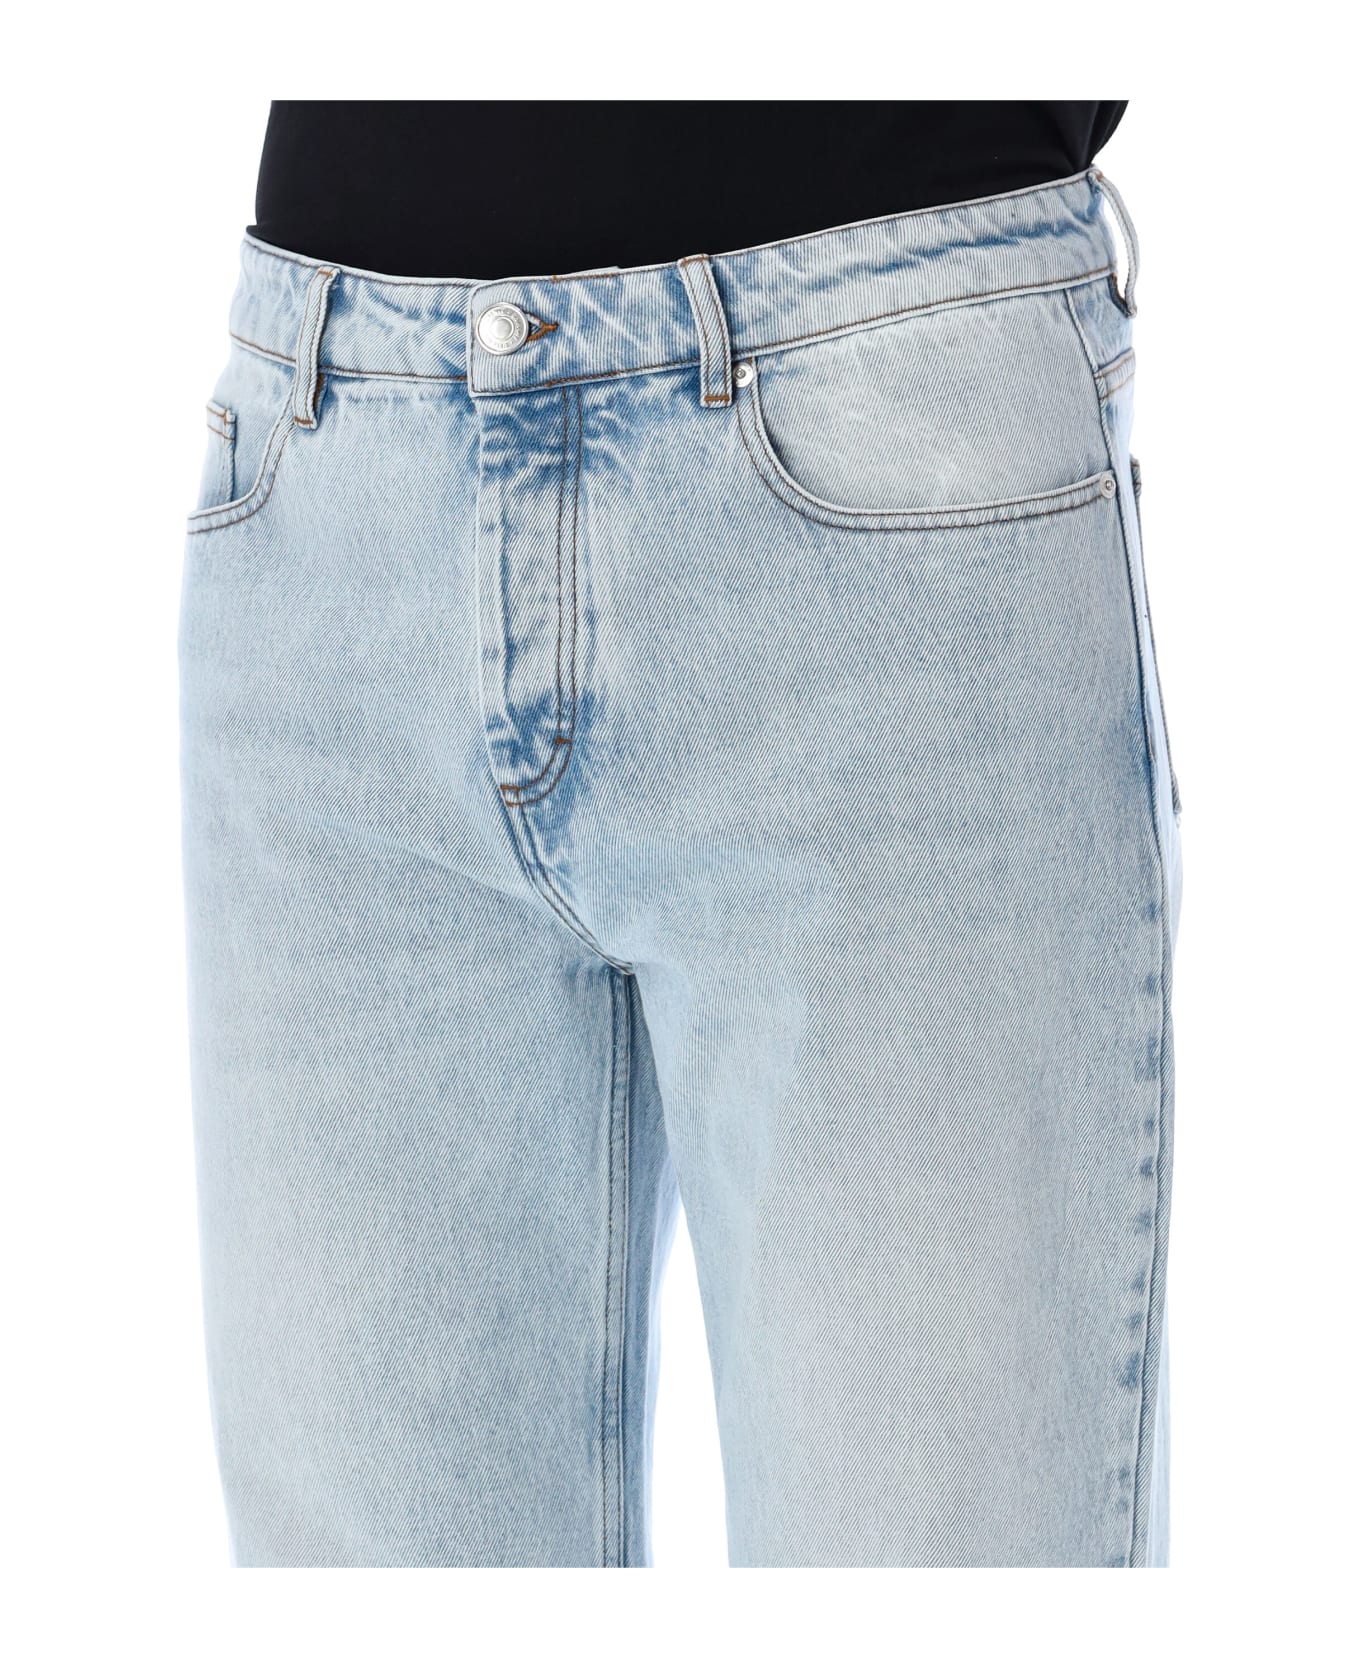 Ami Alexandre Mattiussi Regular 5 Pockets Jeans - Blue Javel デニム